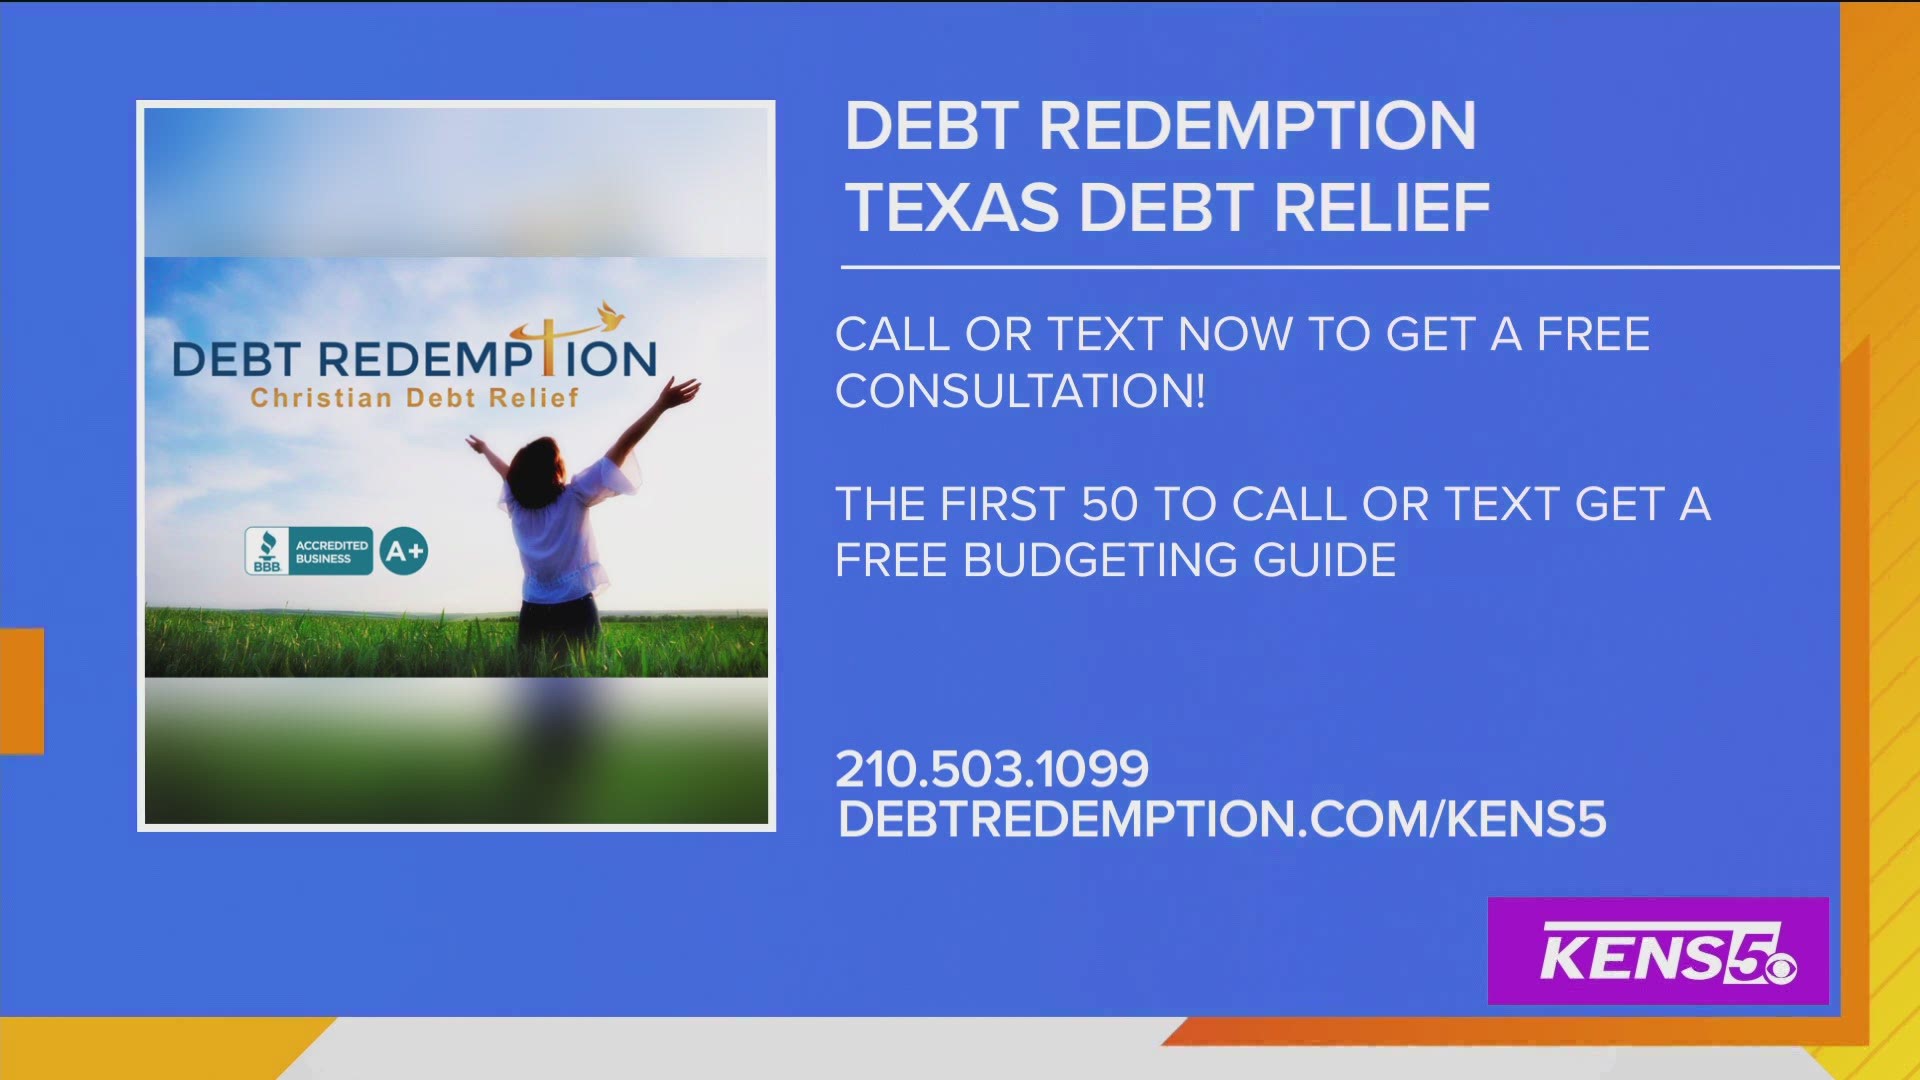 Debt Redemption Texas Debt Relief can help you get control over your growing credit card debt.